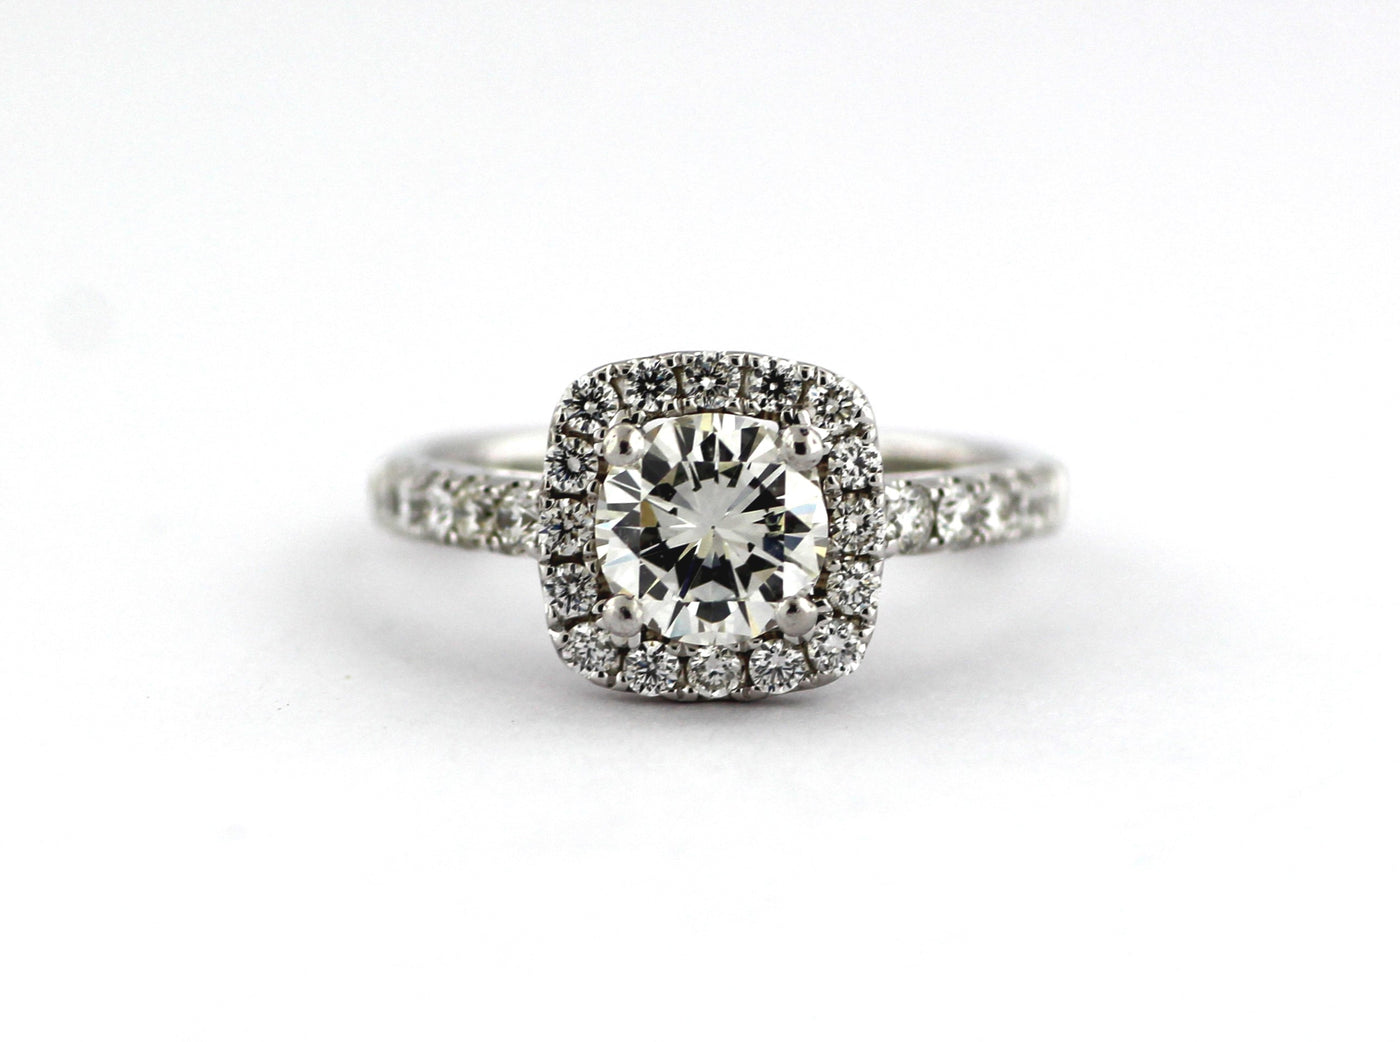 18Kw 1.76 Cttw Diamond Engagement Ring image